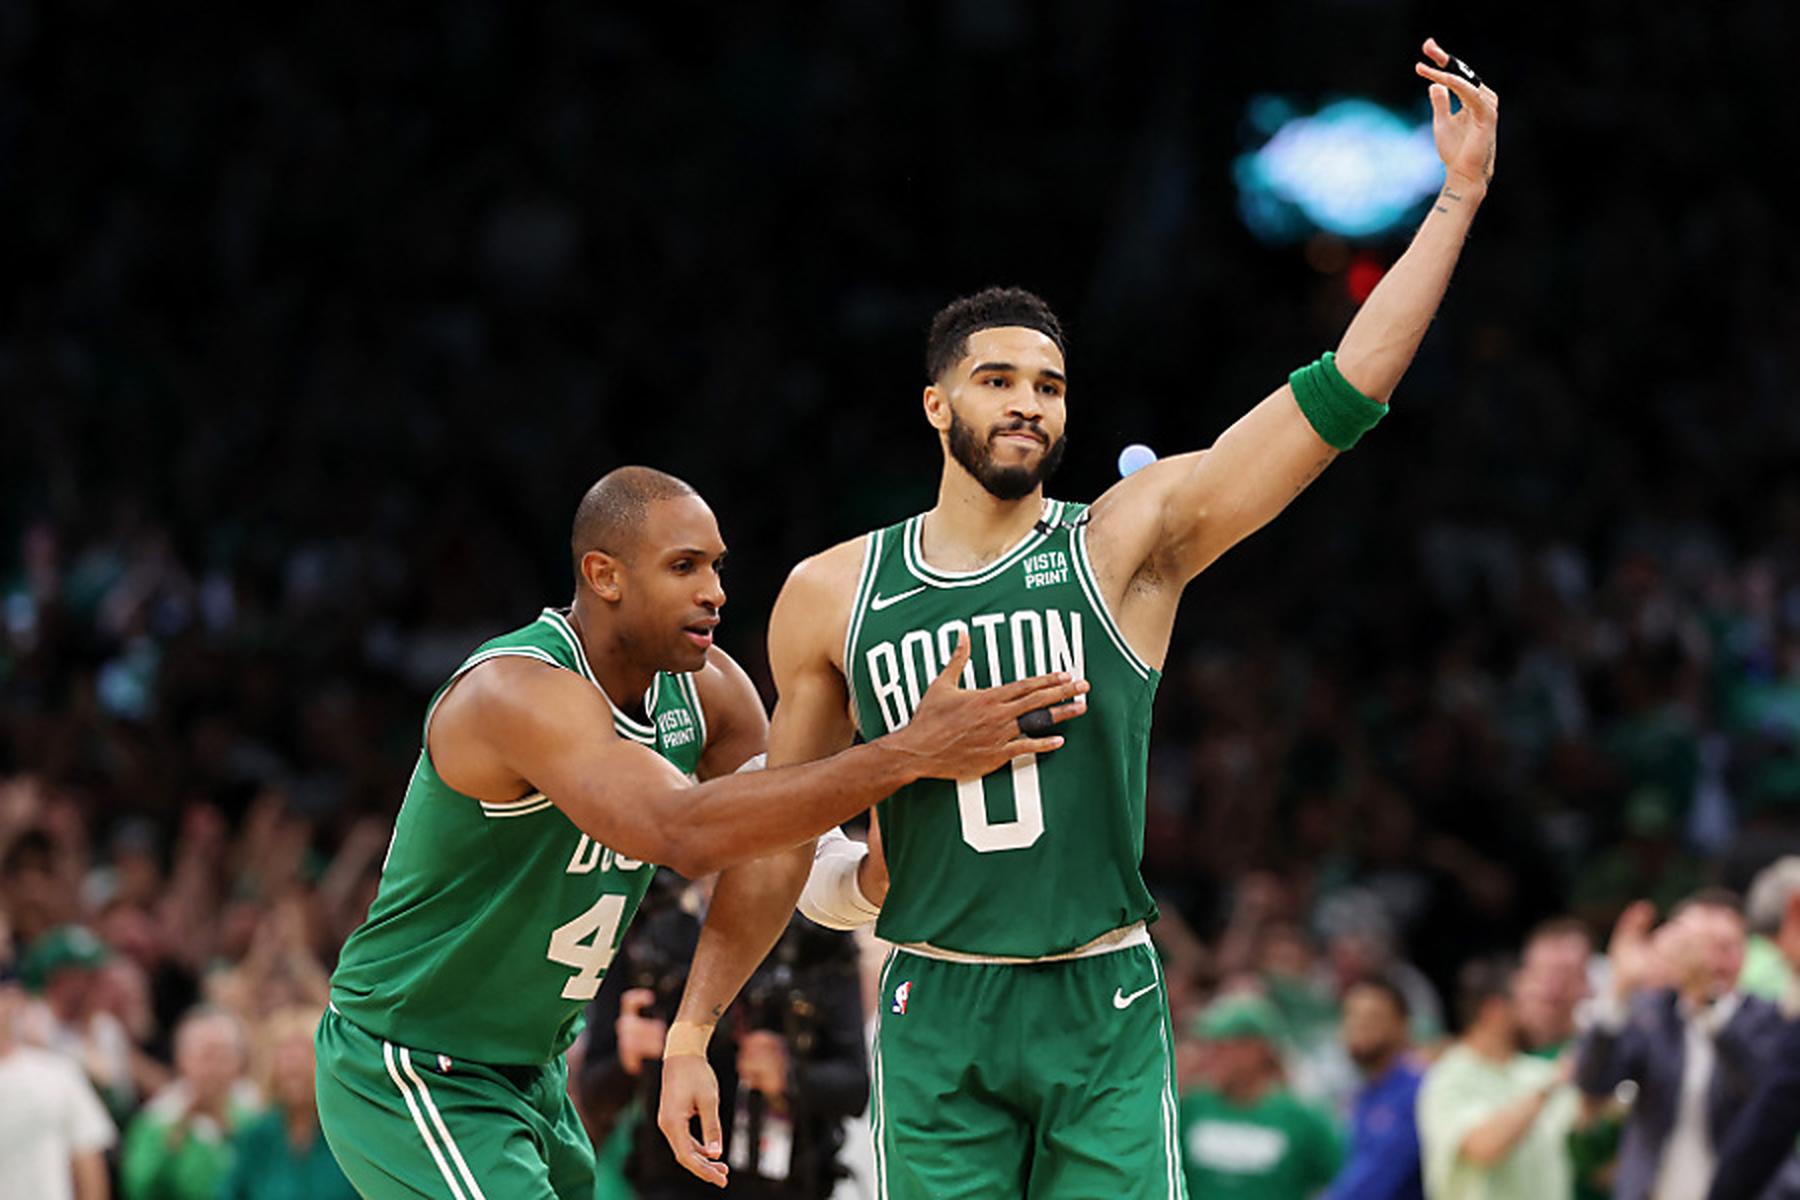 Boston: Boston Celtics mit 18 Titeln Rekordmeister der NBA